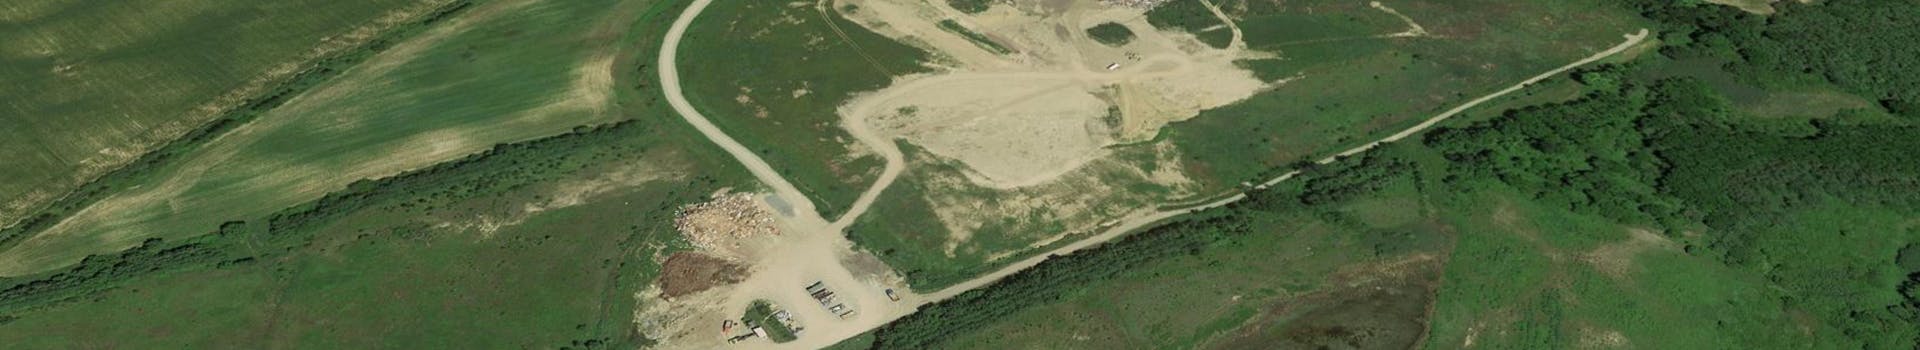 Biggars Lane landfill image from google earth